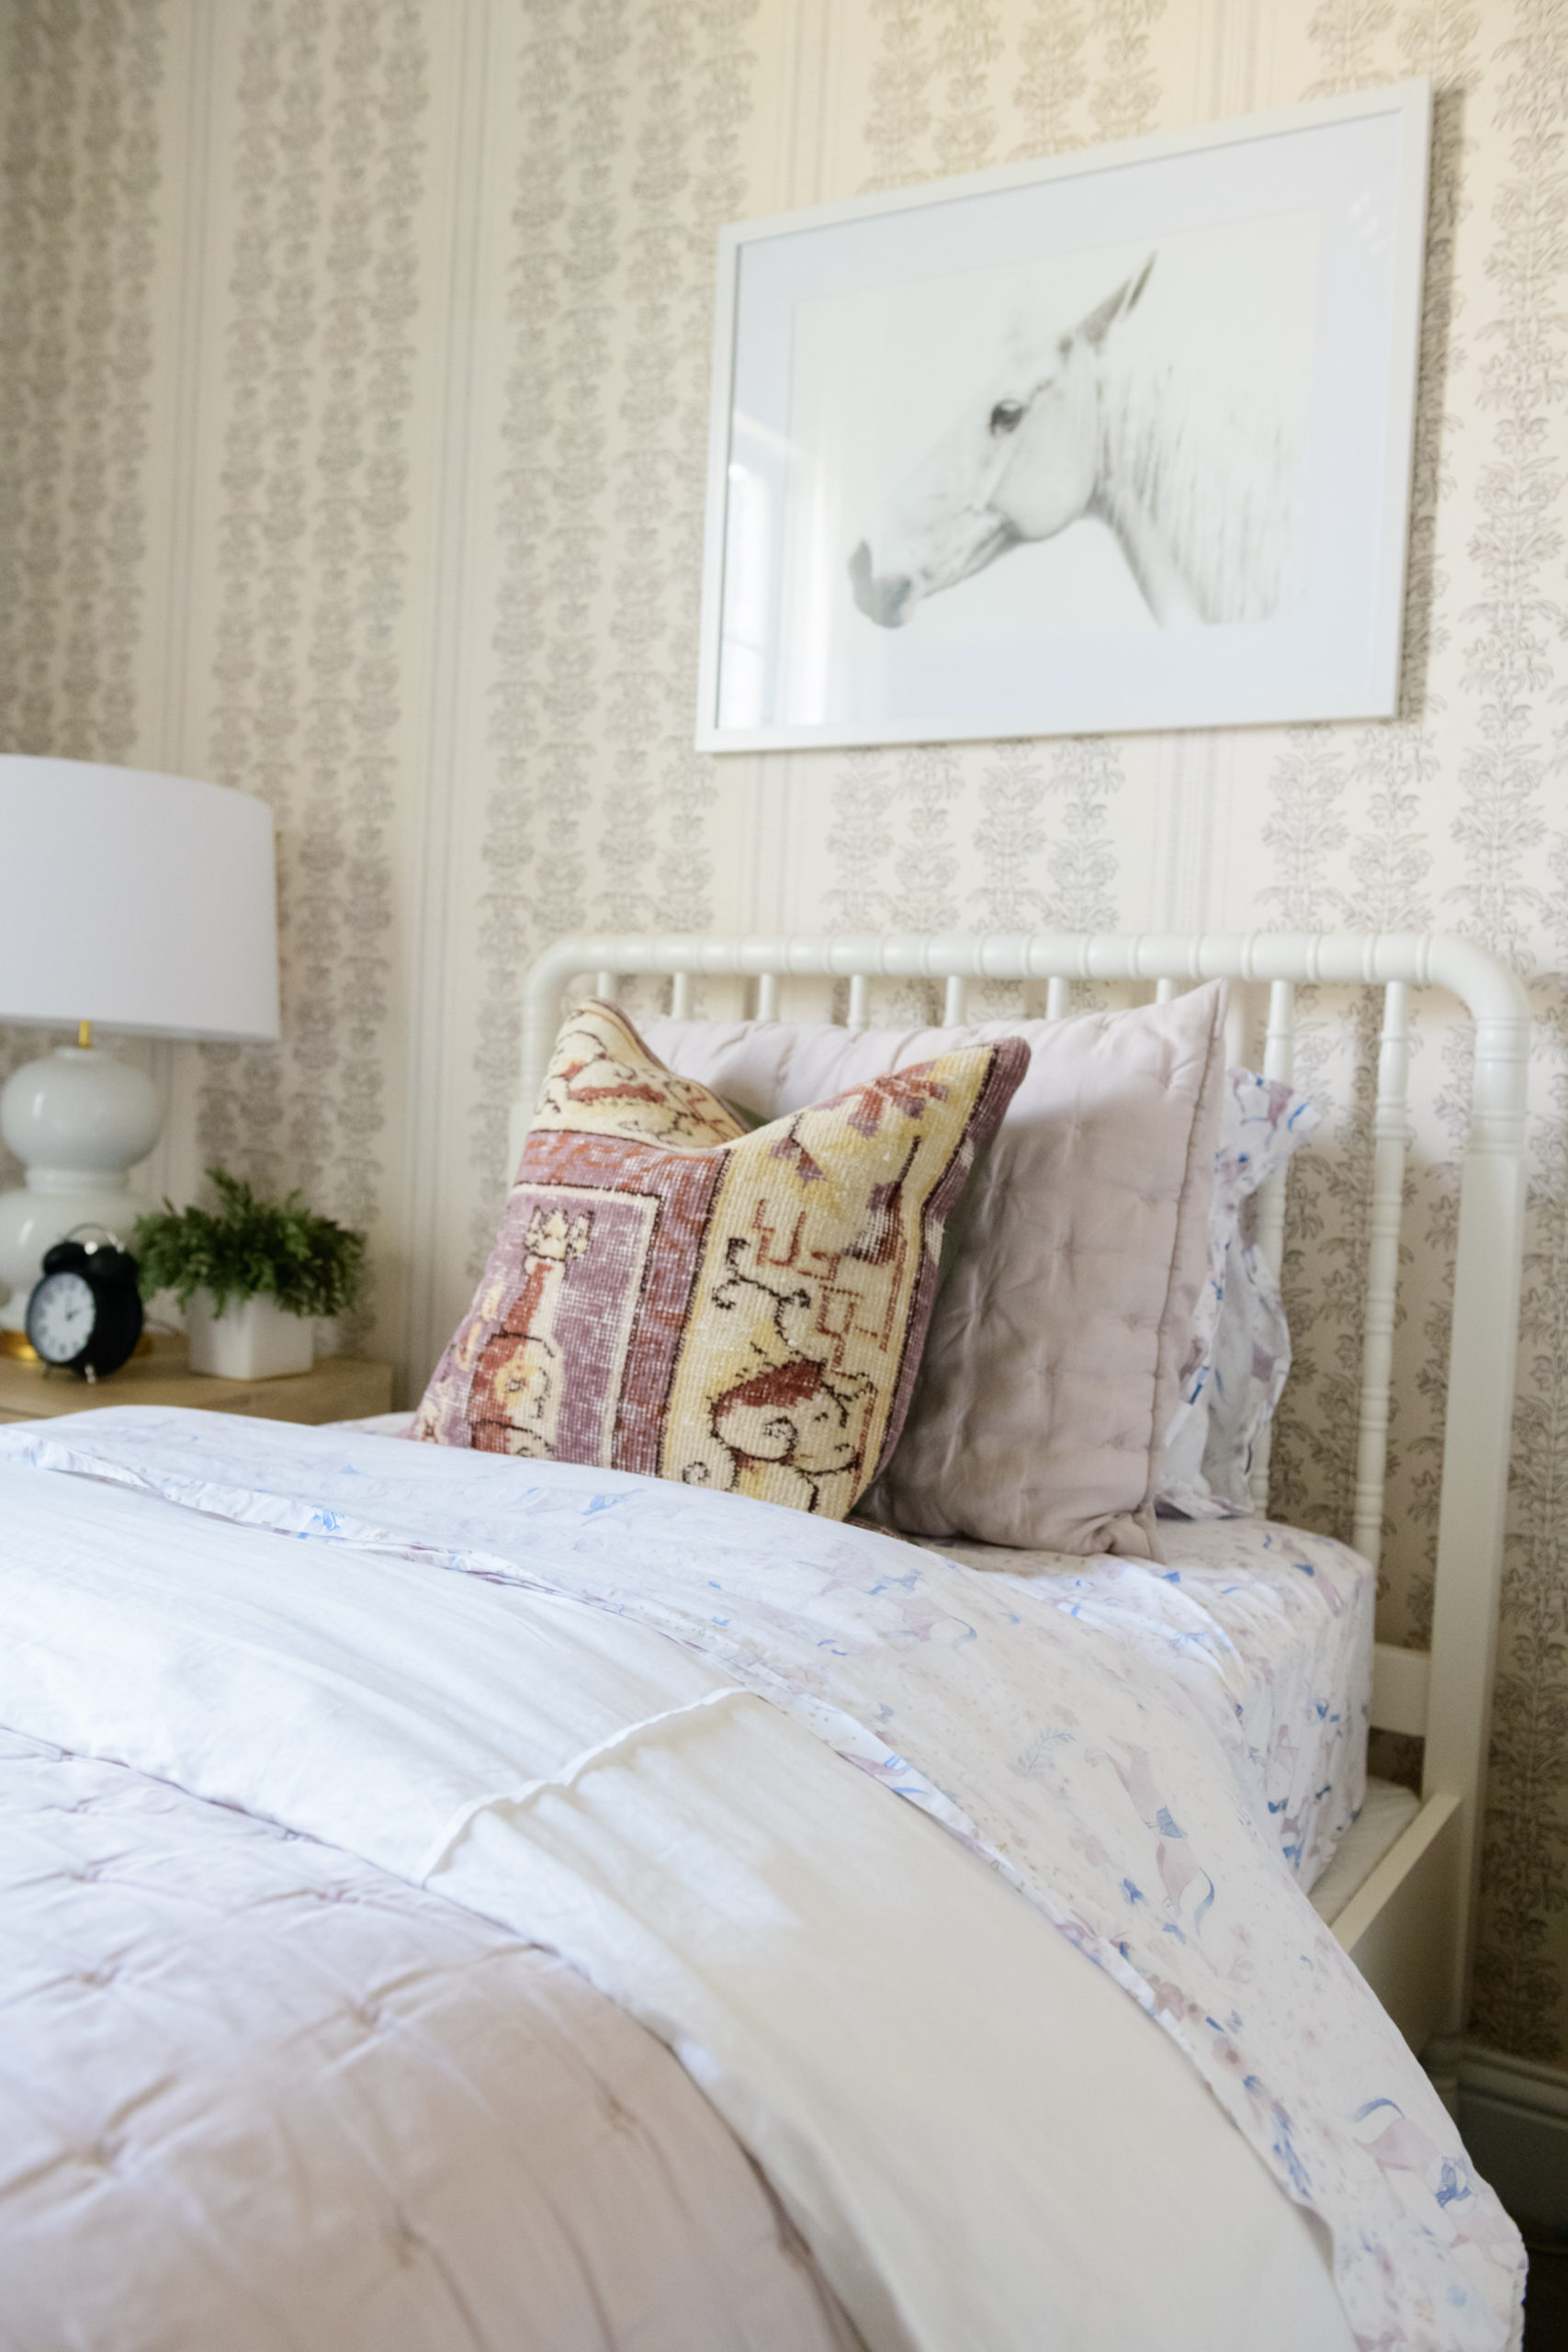 Adding Textile to a Room #vintageinspired #textiles #vintagerug #silkycomforter #design #traditionalstyle #interiordesign #beddingforgirlsroom 